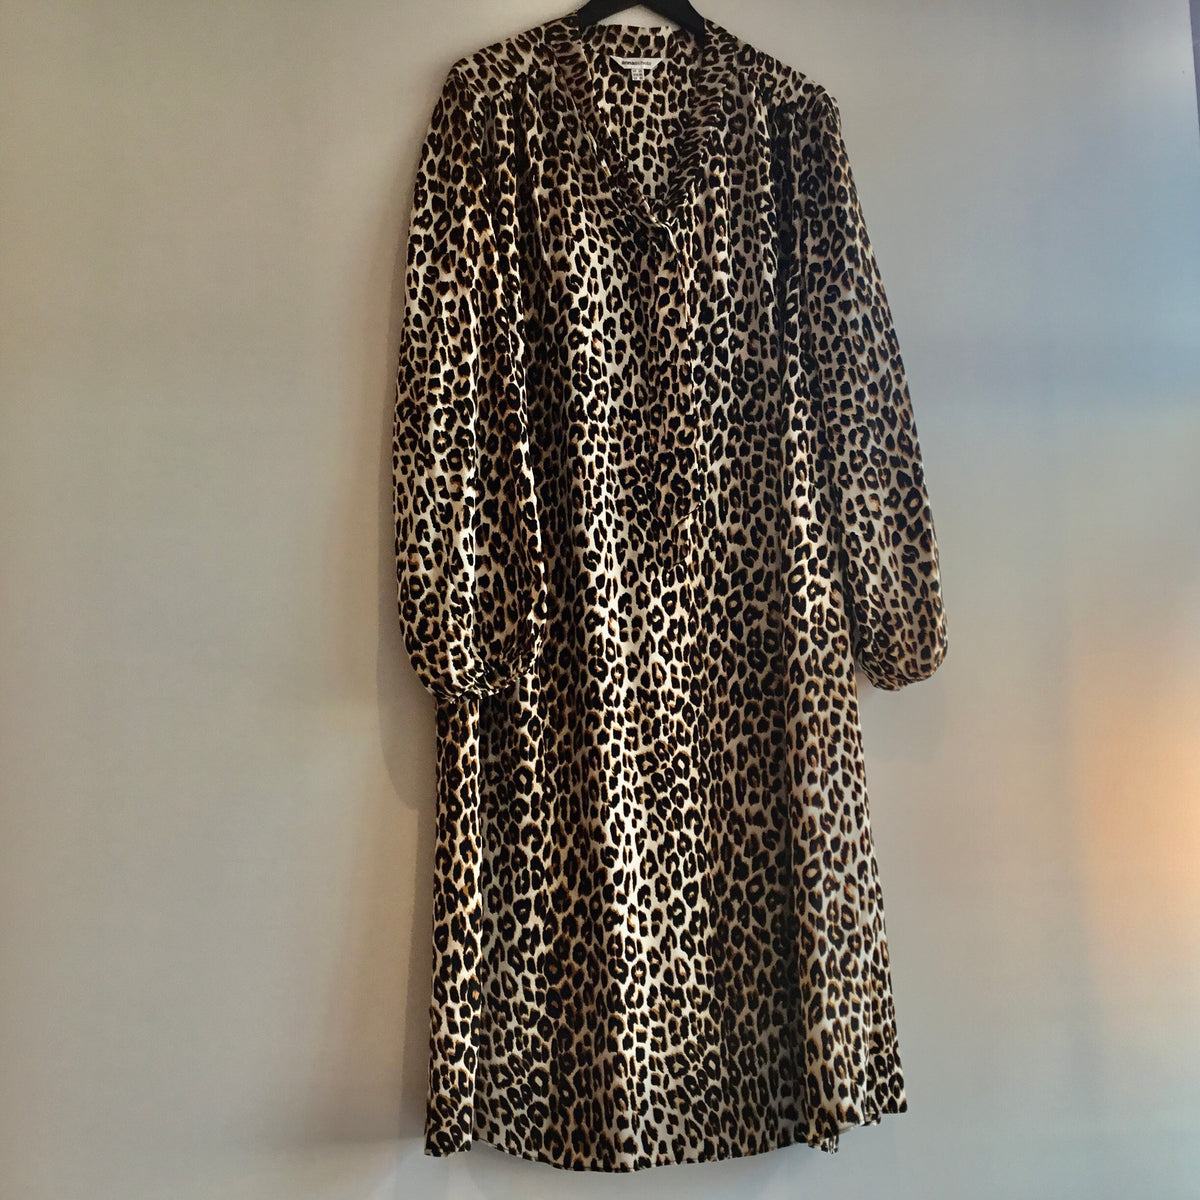 Anna Scholz silk tie leopard print dress Natural/Tan/Blk Size 24